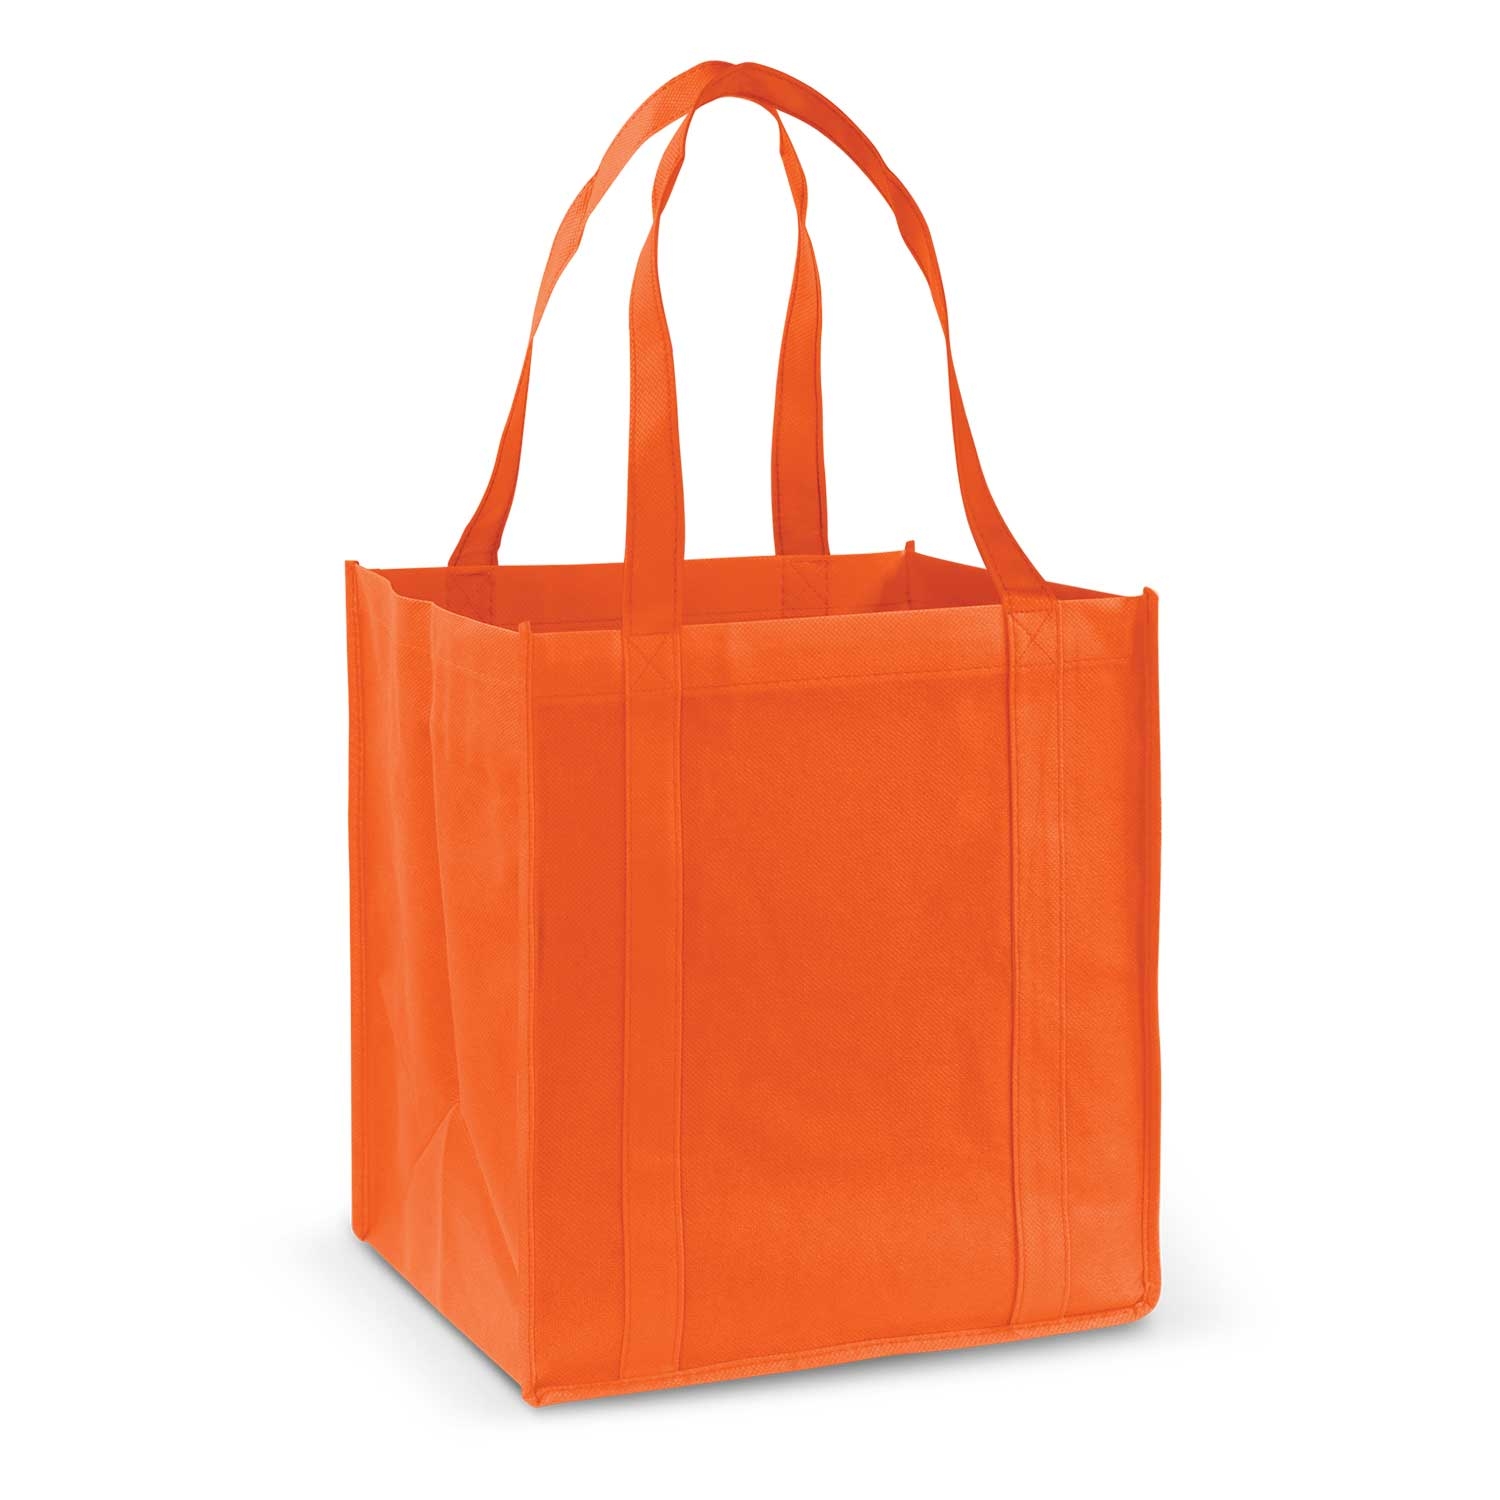 Super Shopper Tote Bag - Image Group